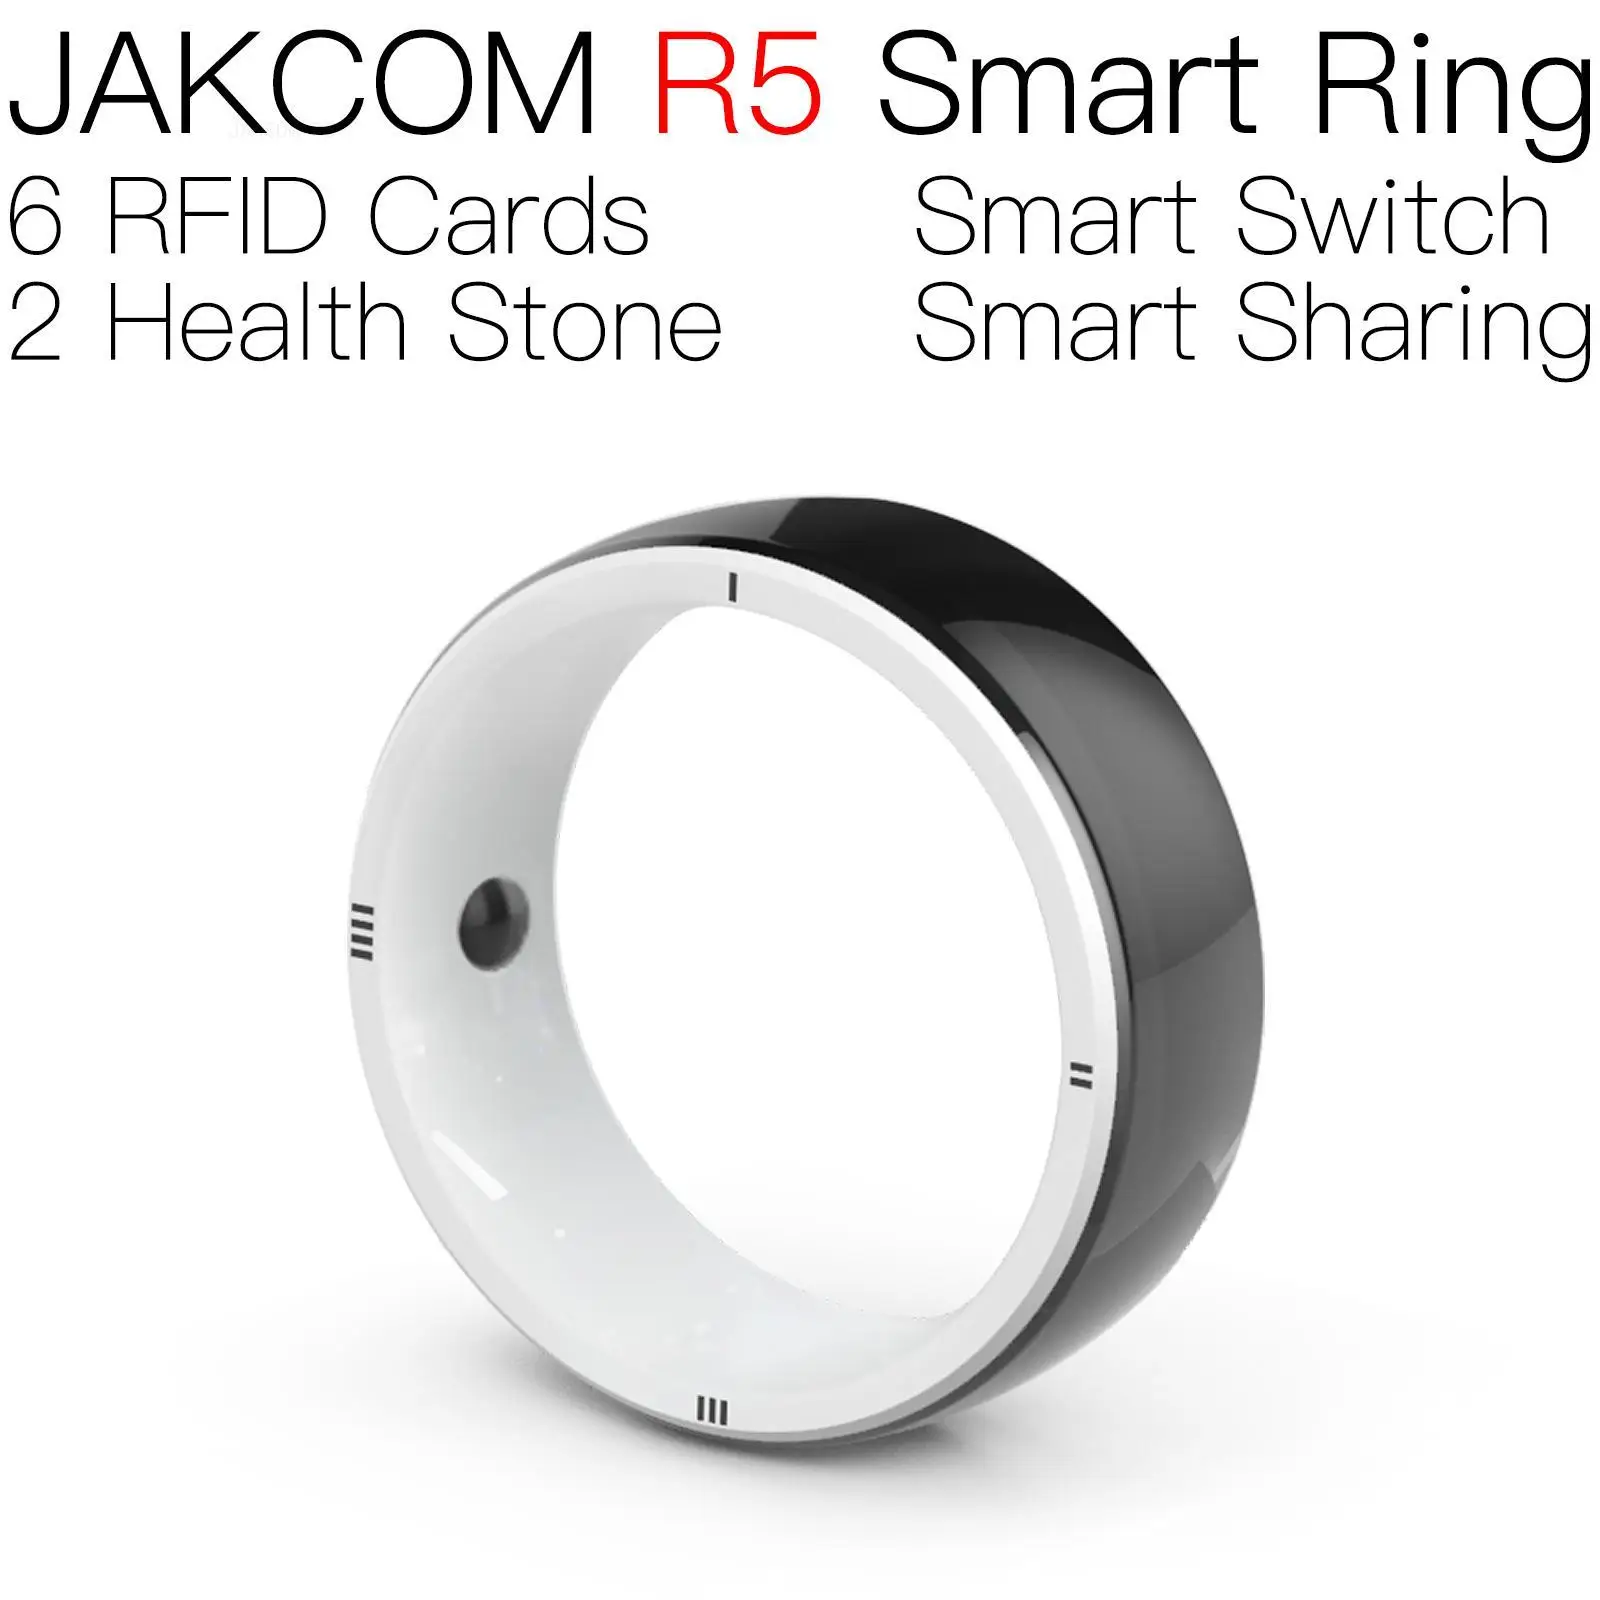 

JAKCOM R5 Smart Ring Super value than nfc tag sticker security rfid uhf hf microchip 18mm diametre animal ear adata memory card